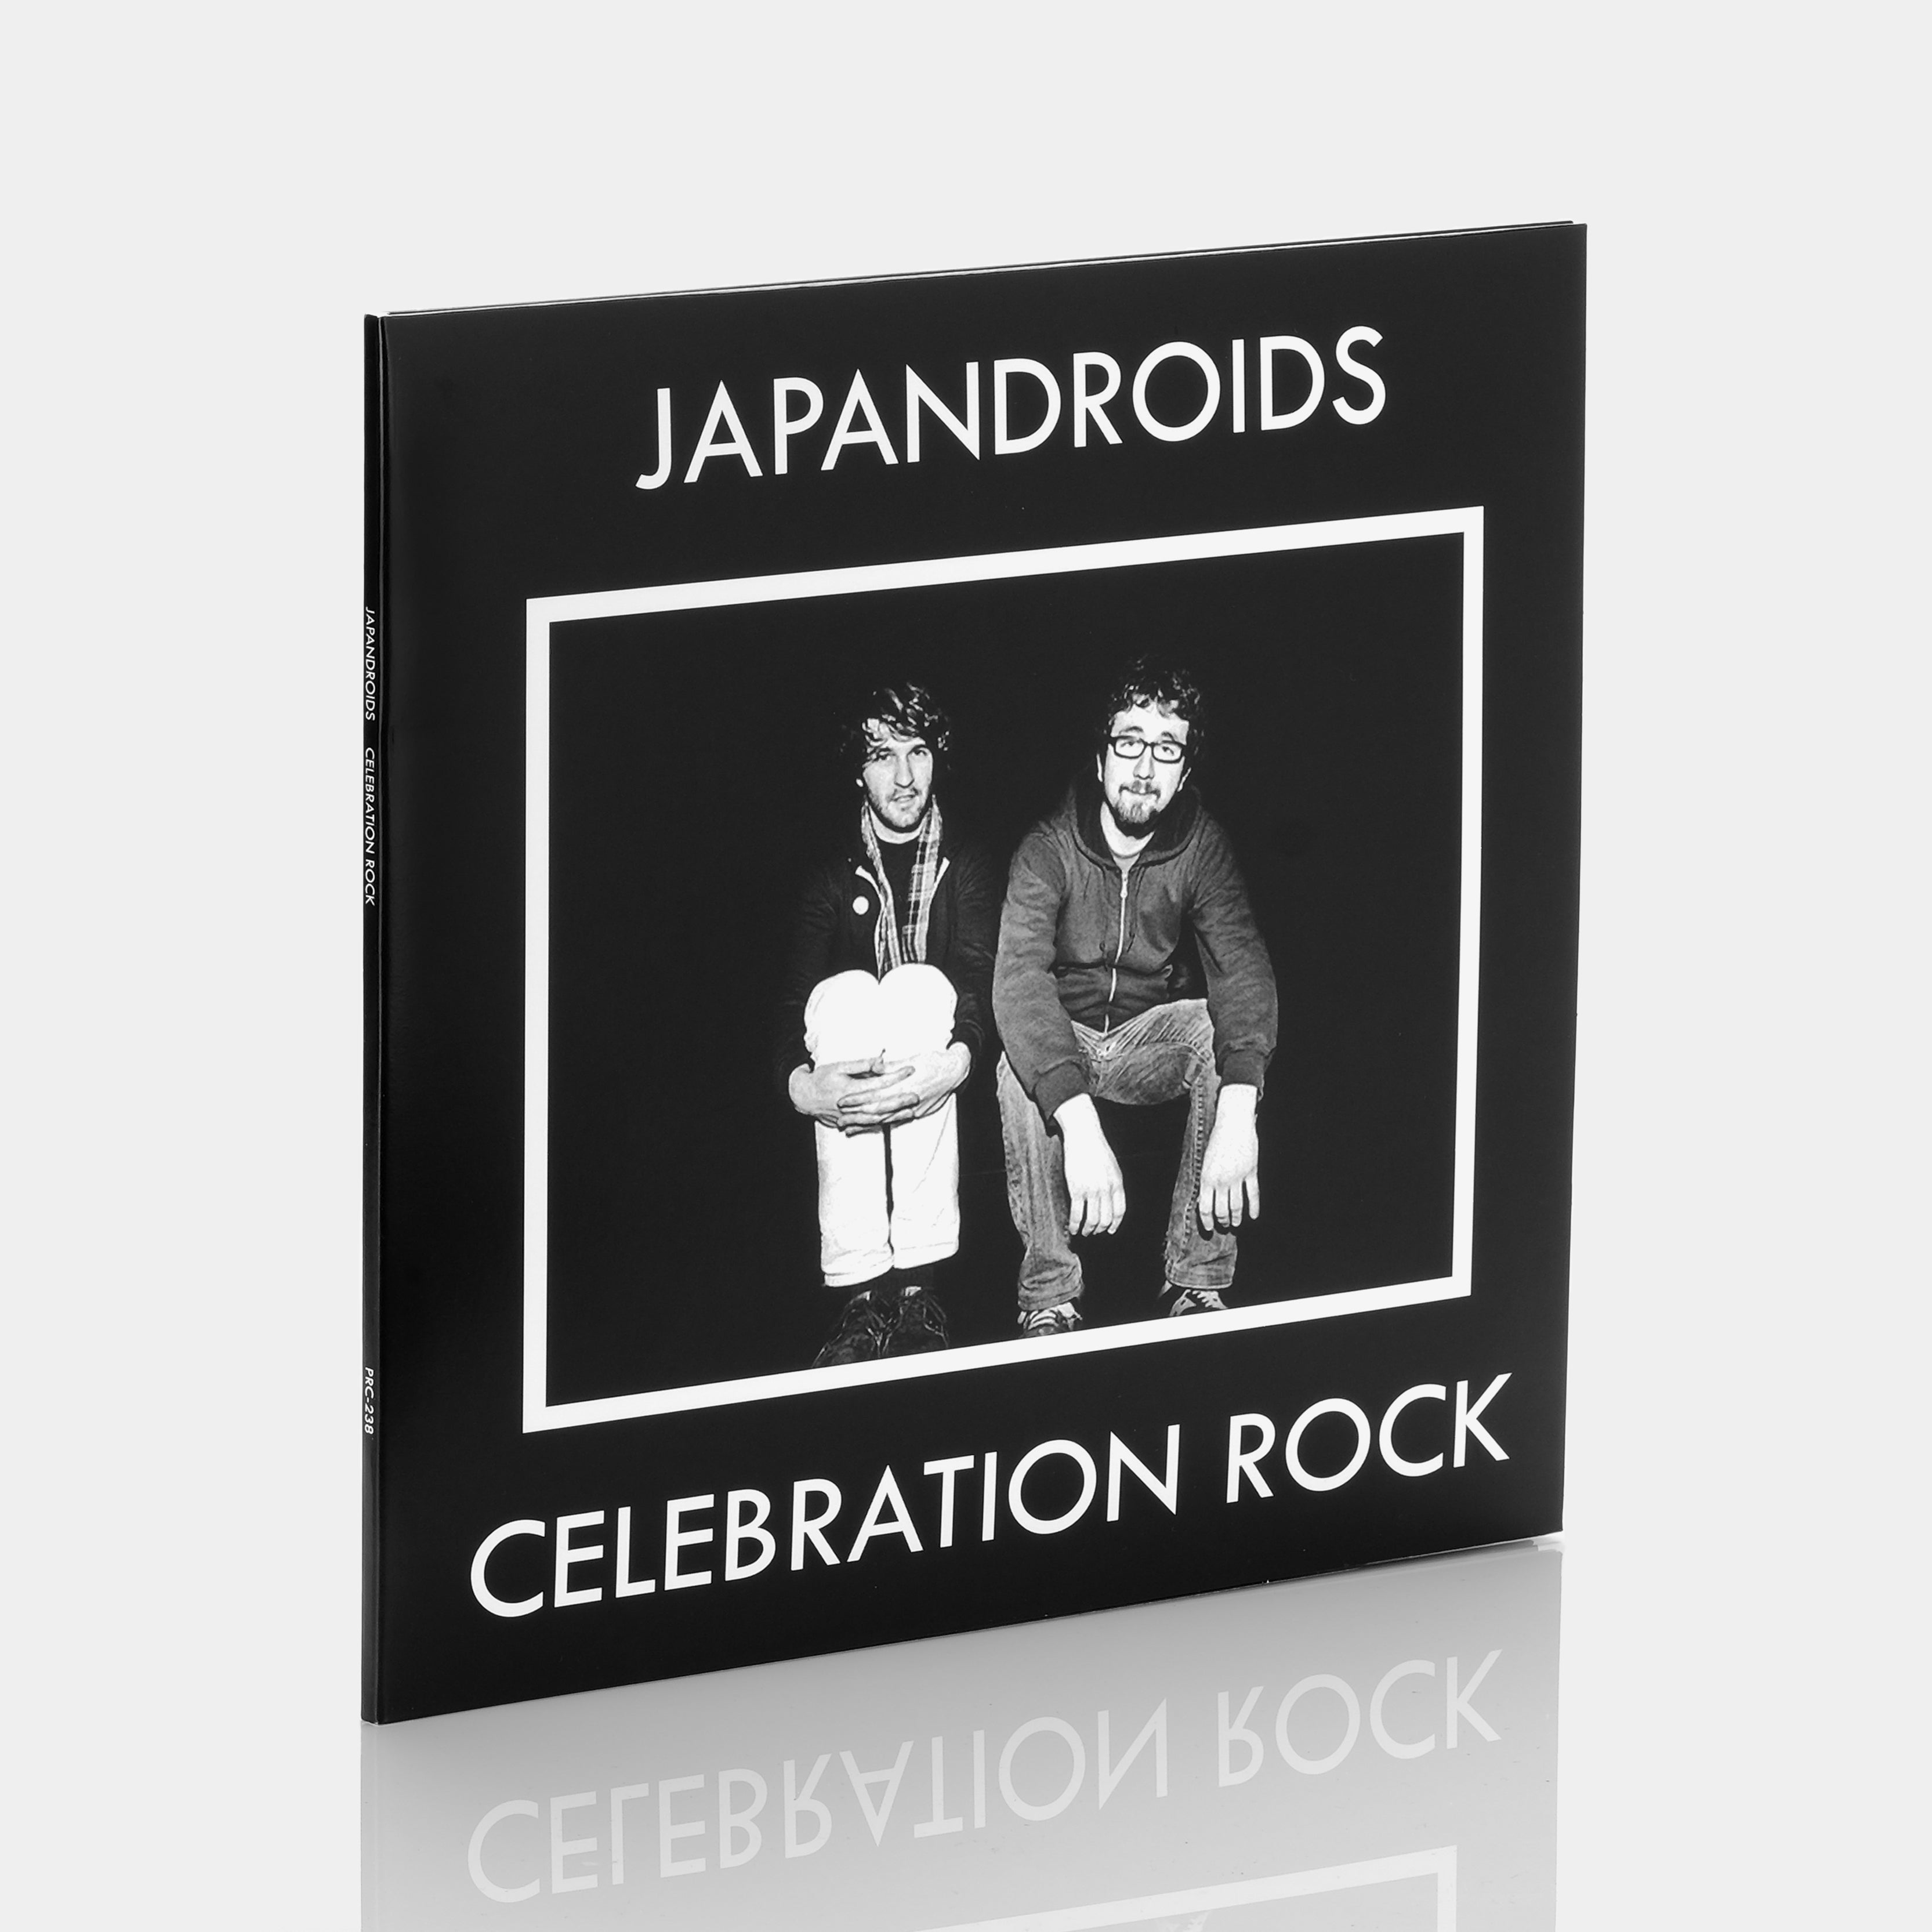 Japandroids - Celebration Rock LP White Vinyl Record